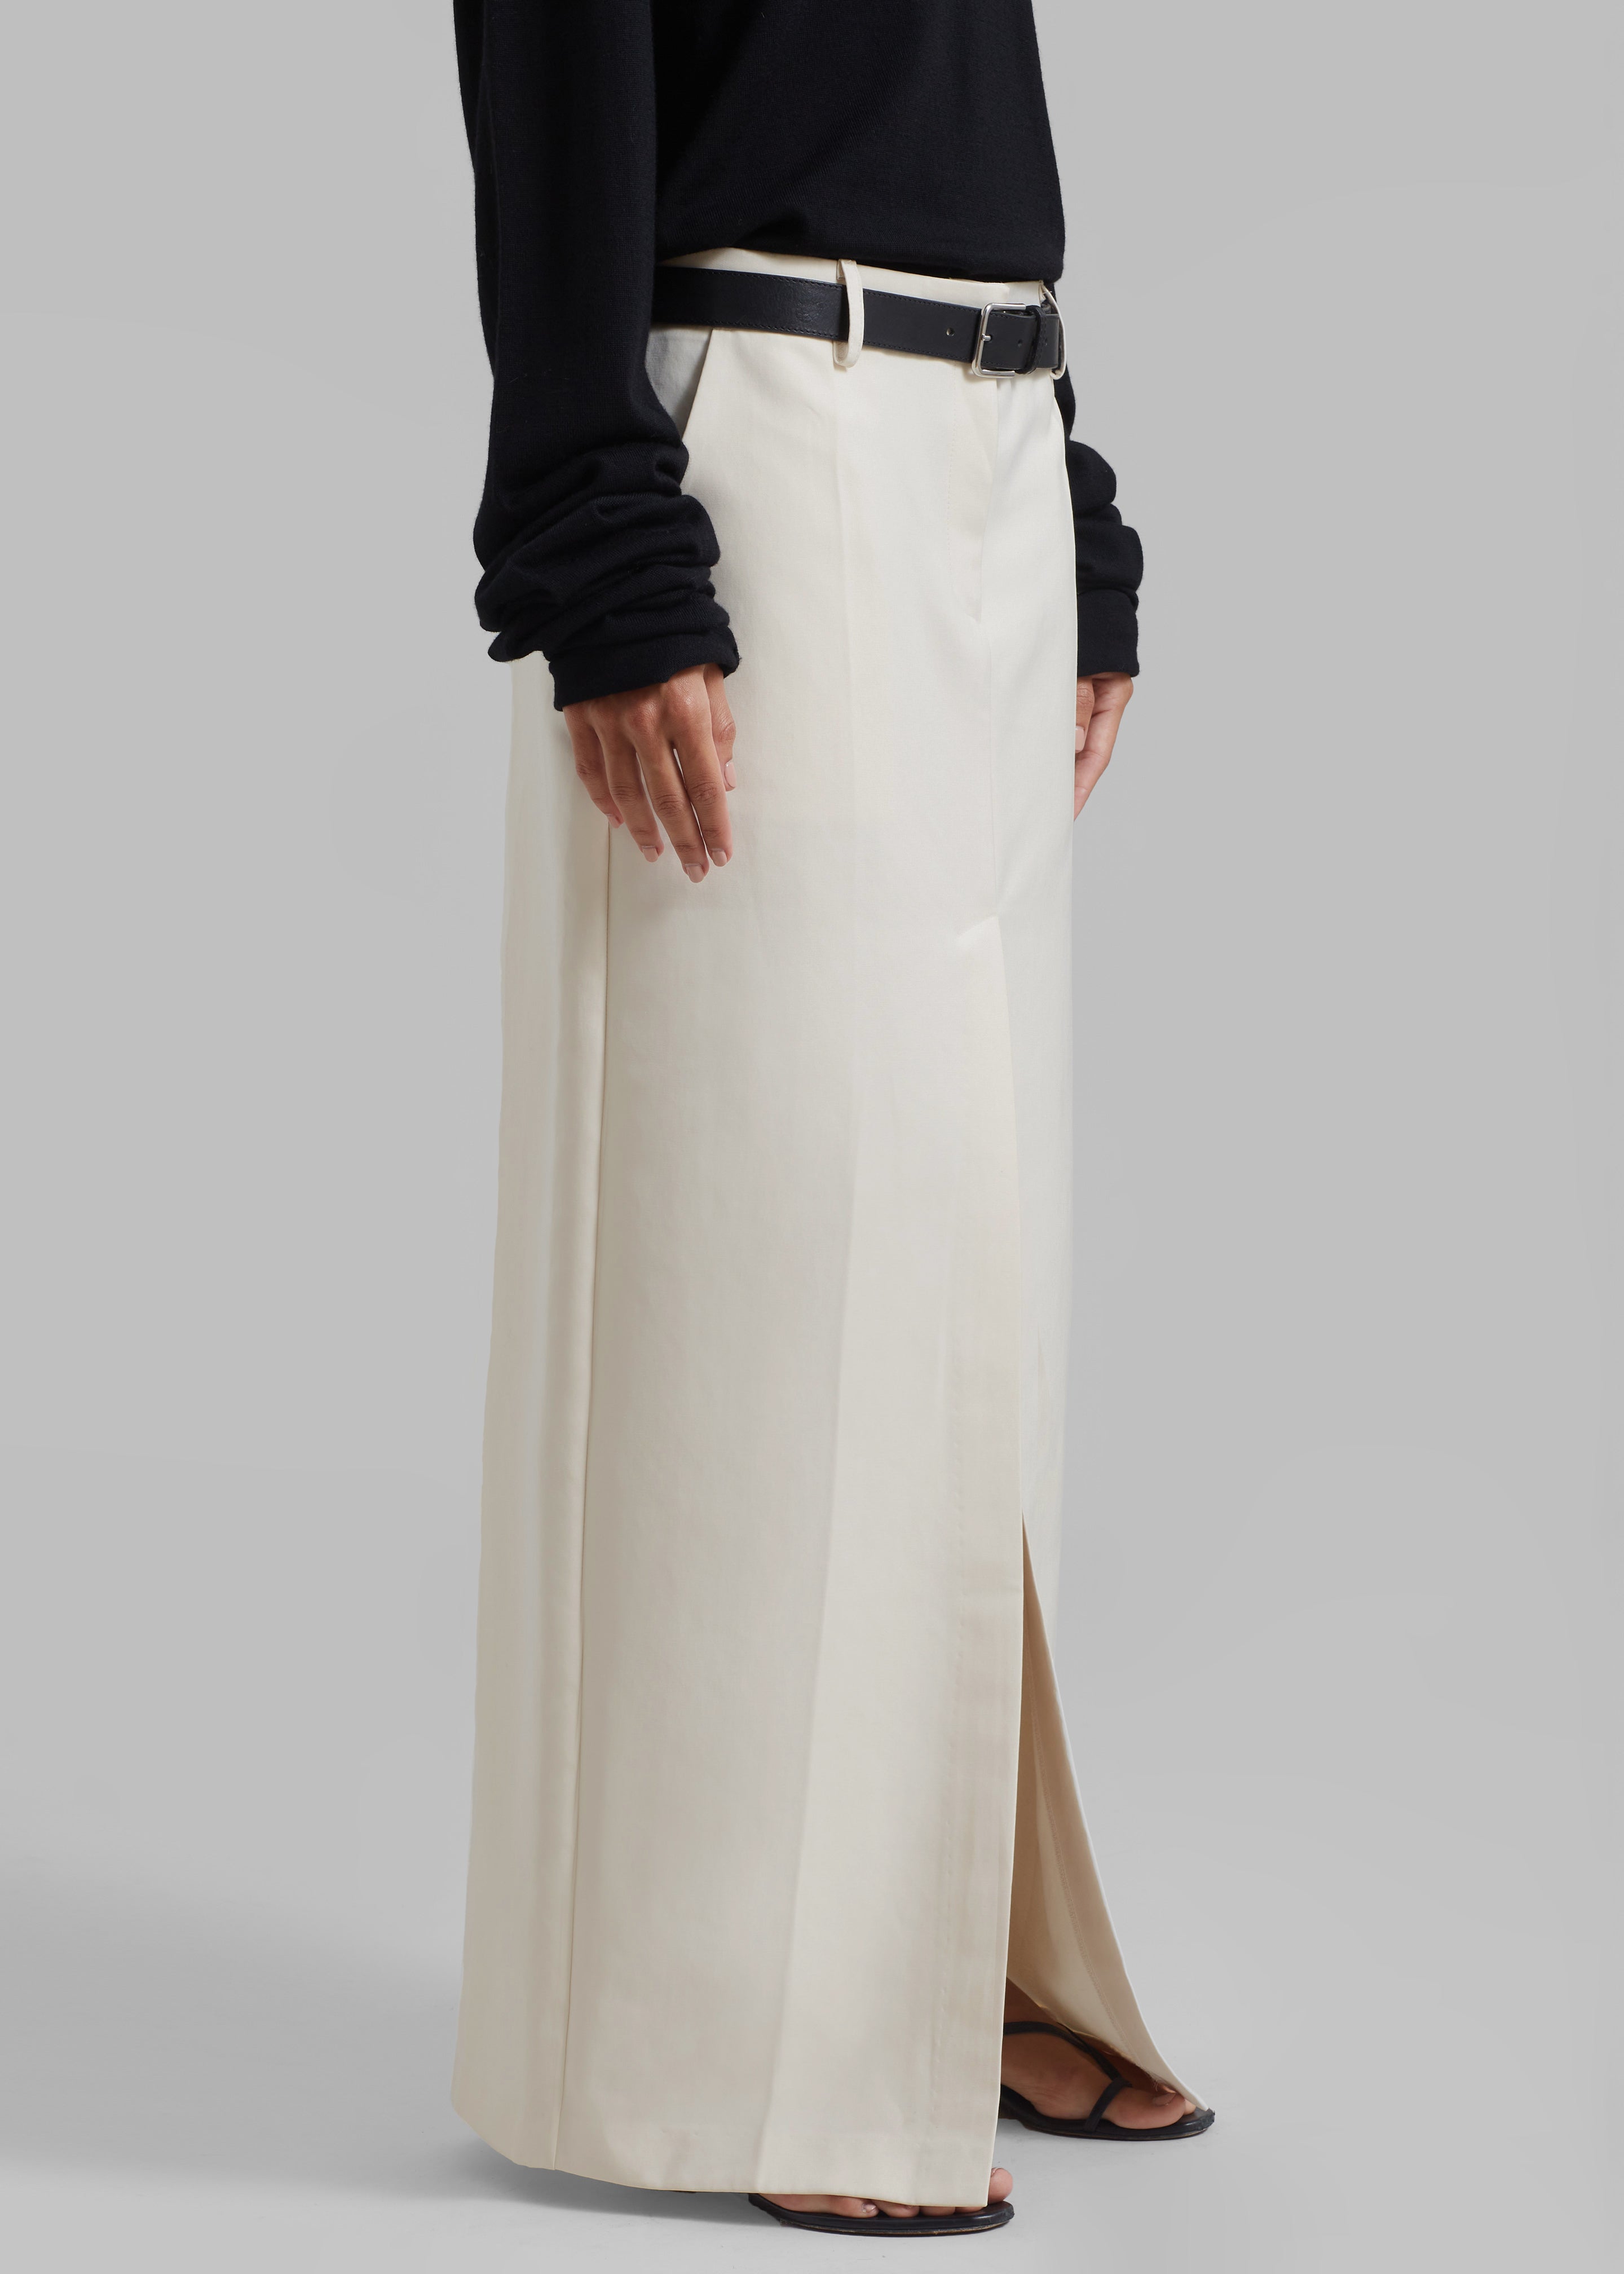 Carley Long Skirt - Cream - 8